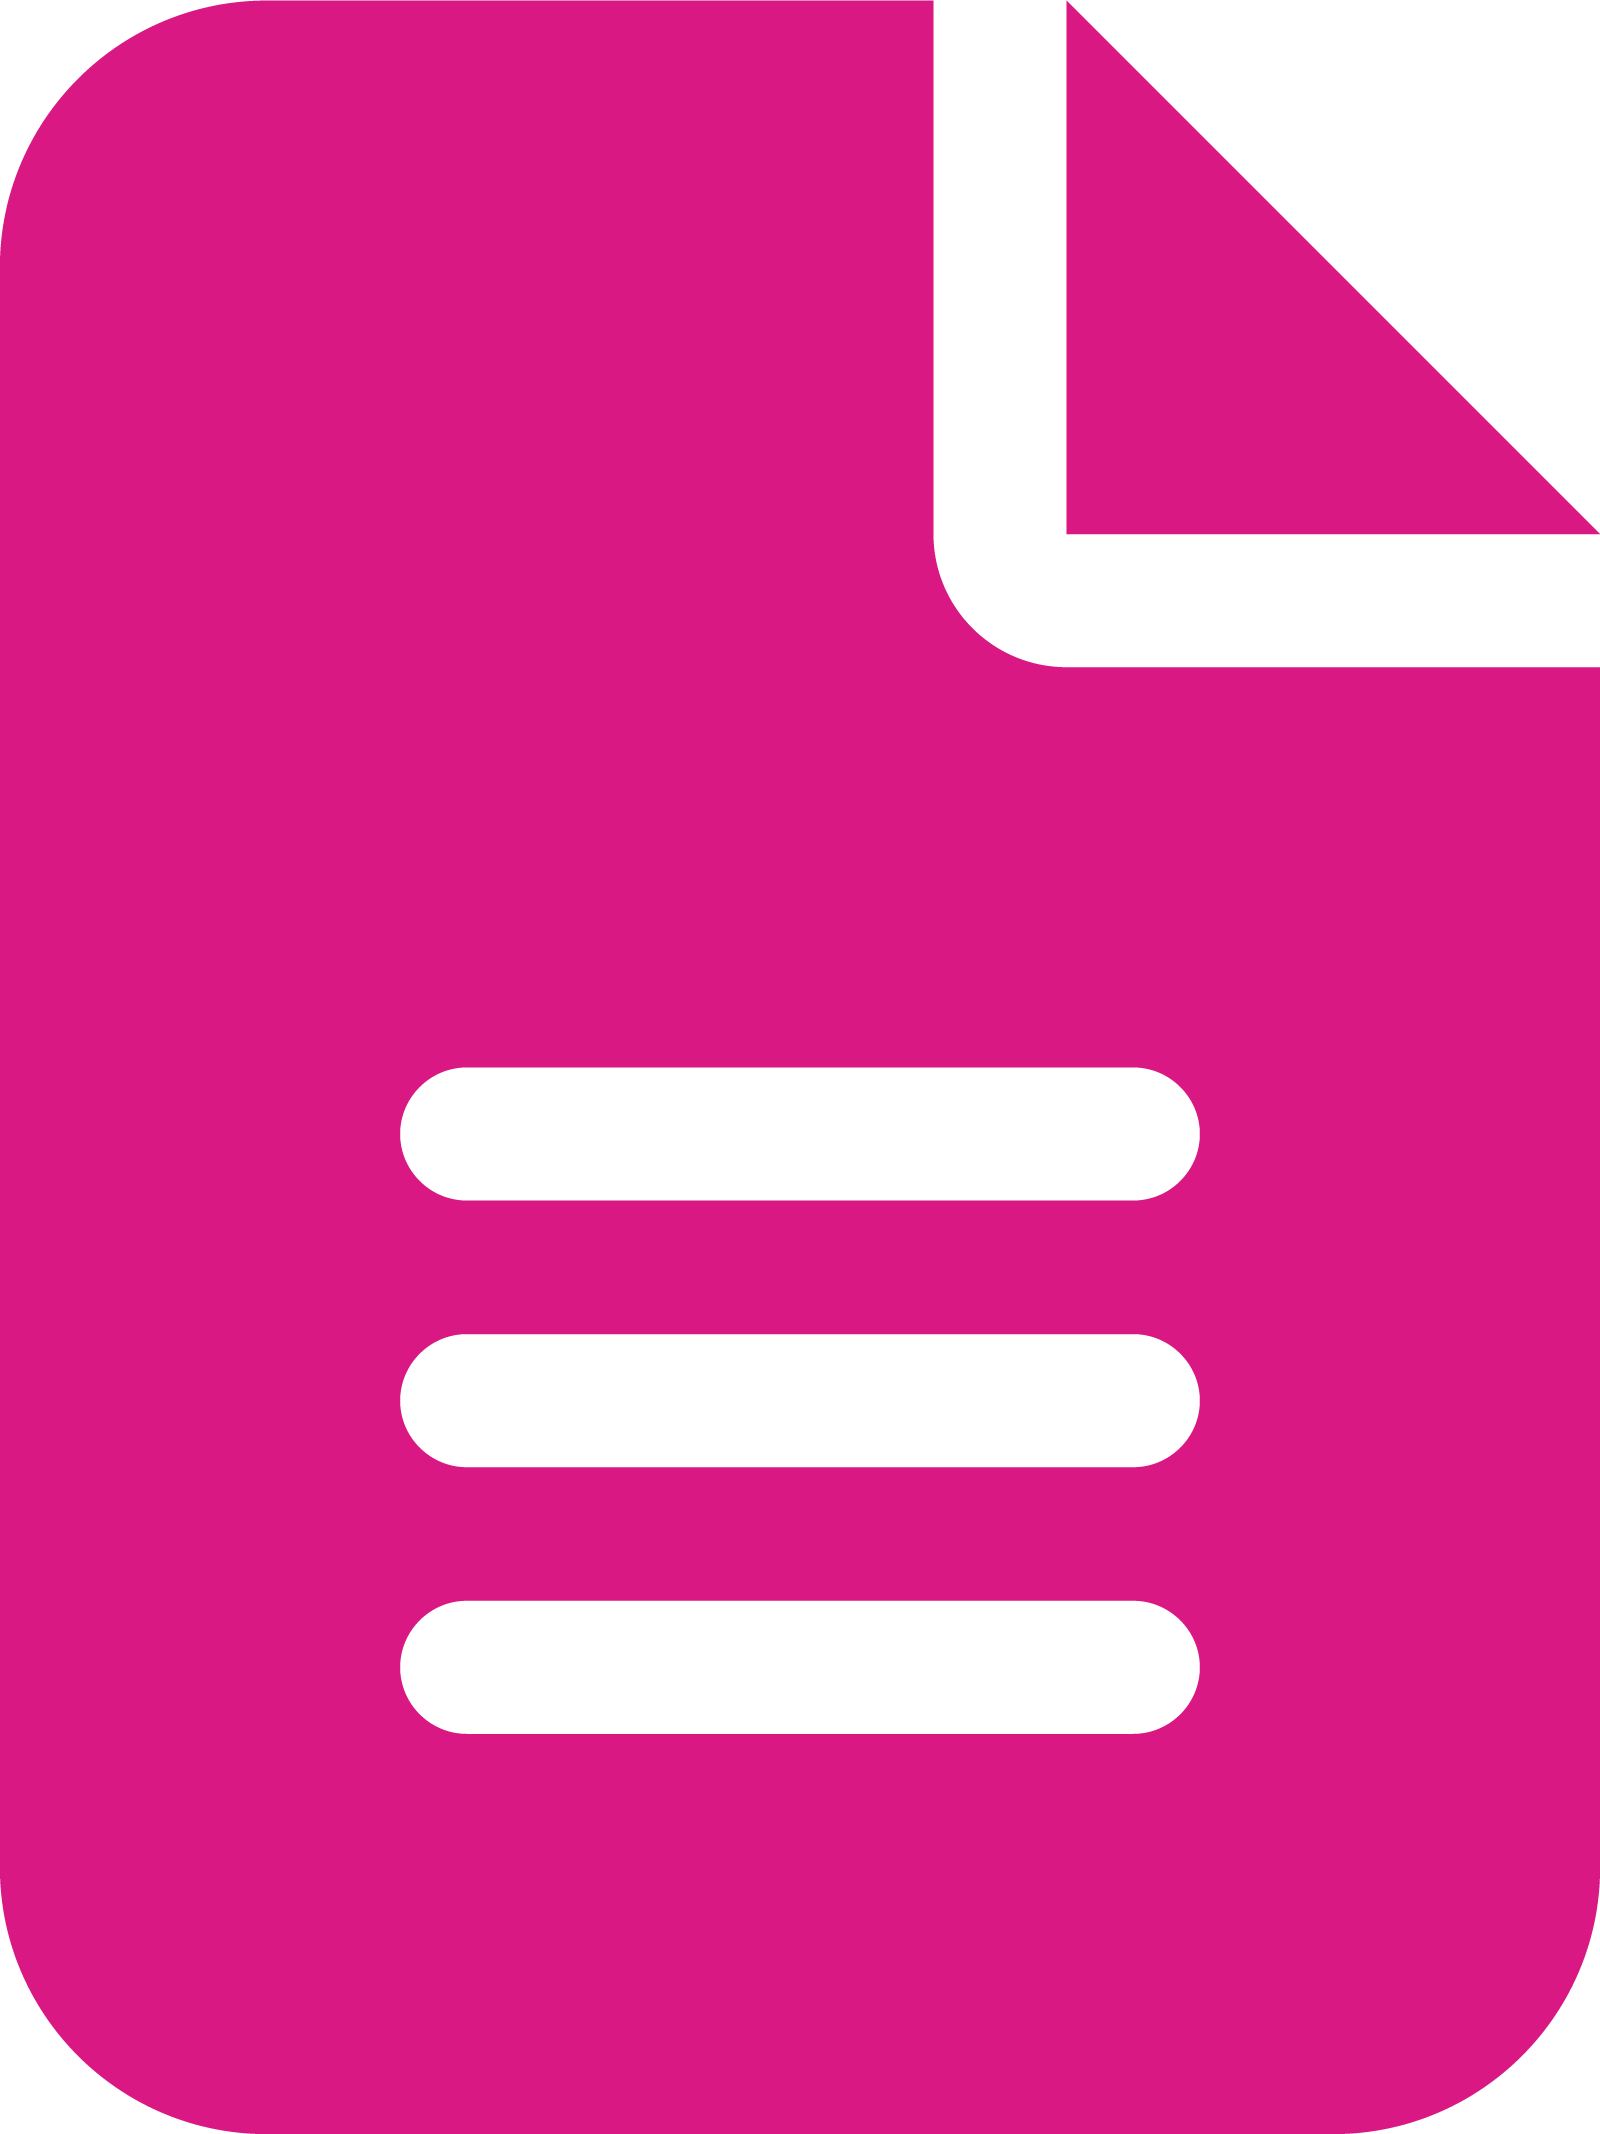 Pink document icon